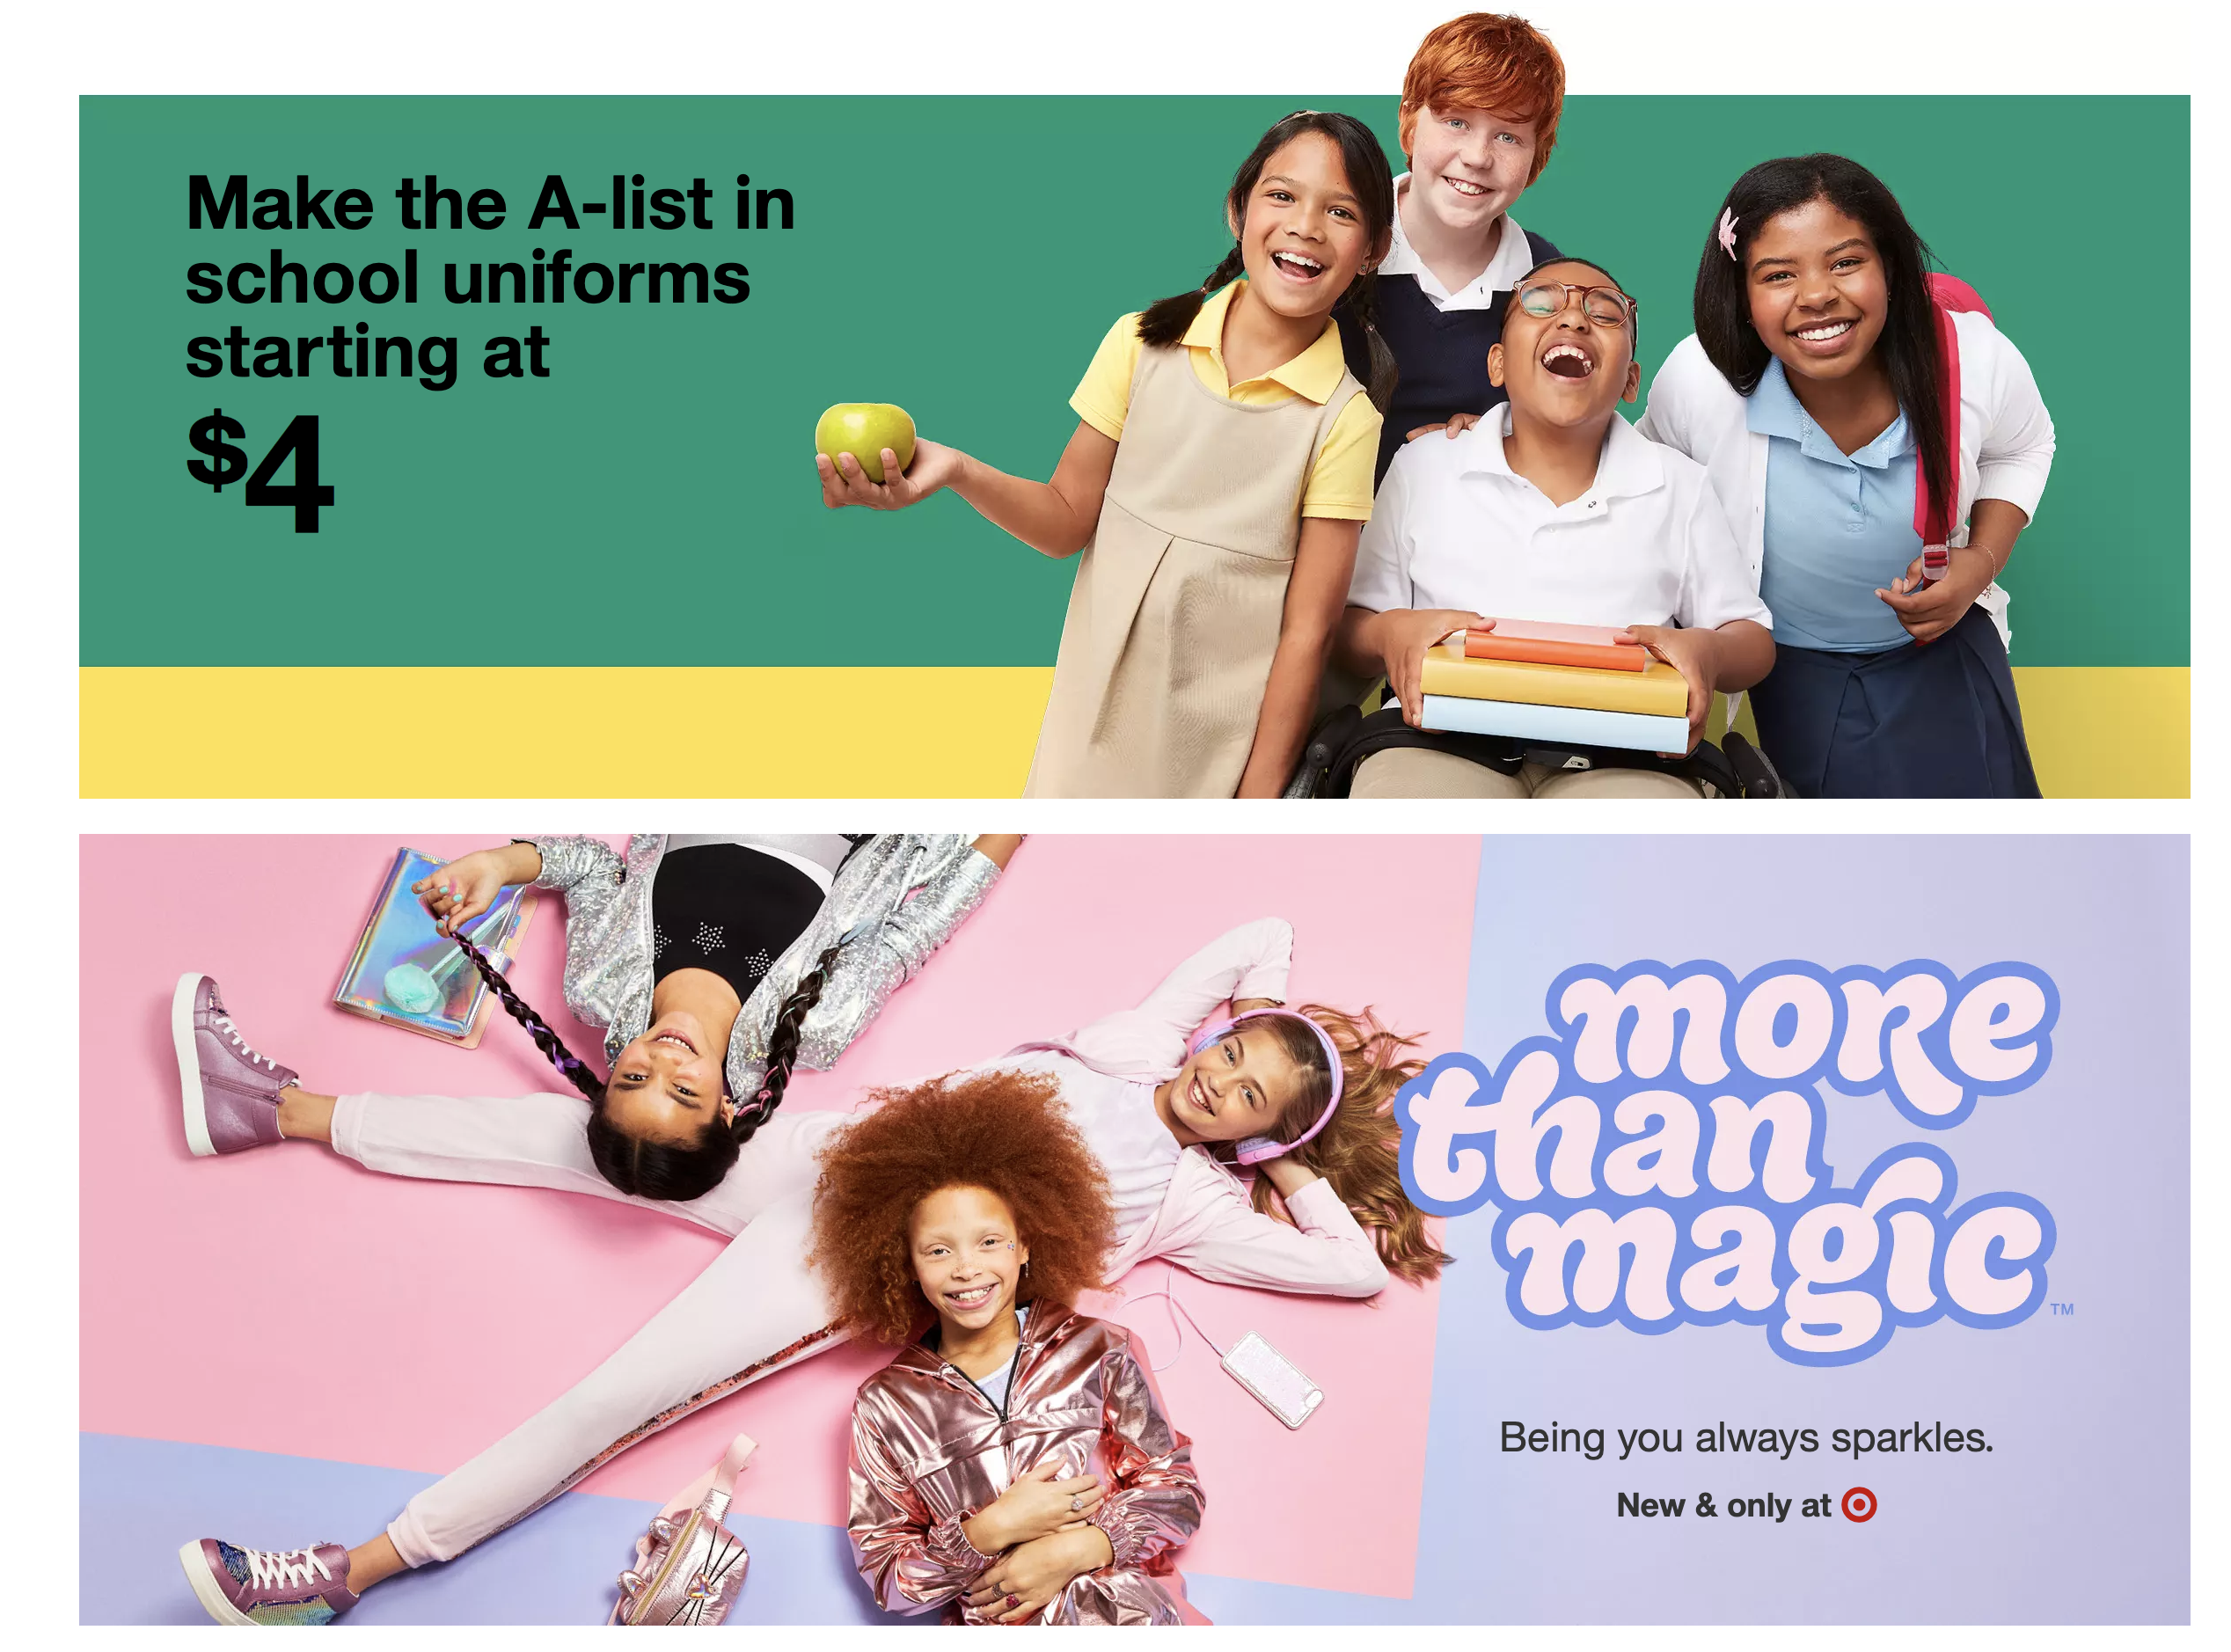 target-back-to-school-ads-uniforms-sparkles